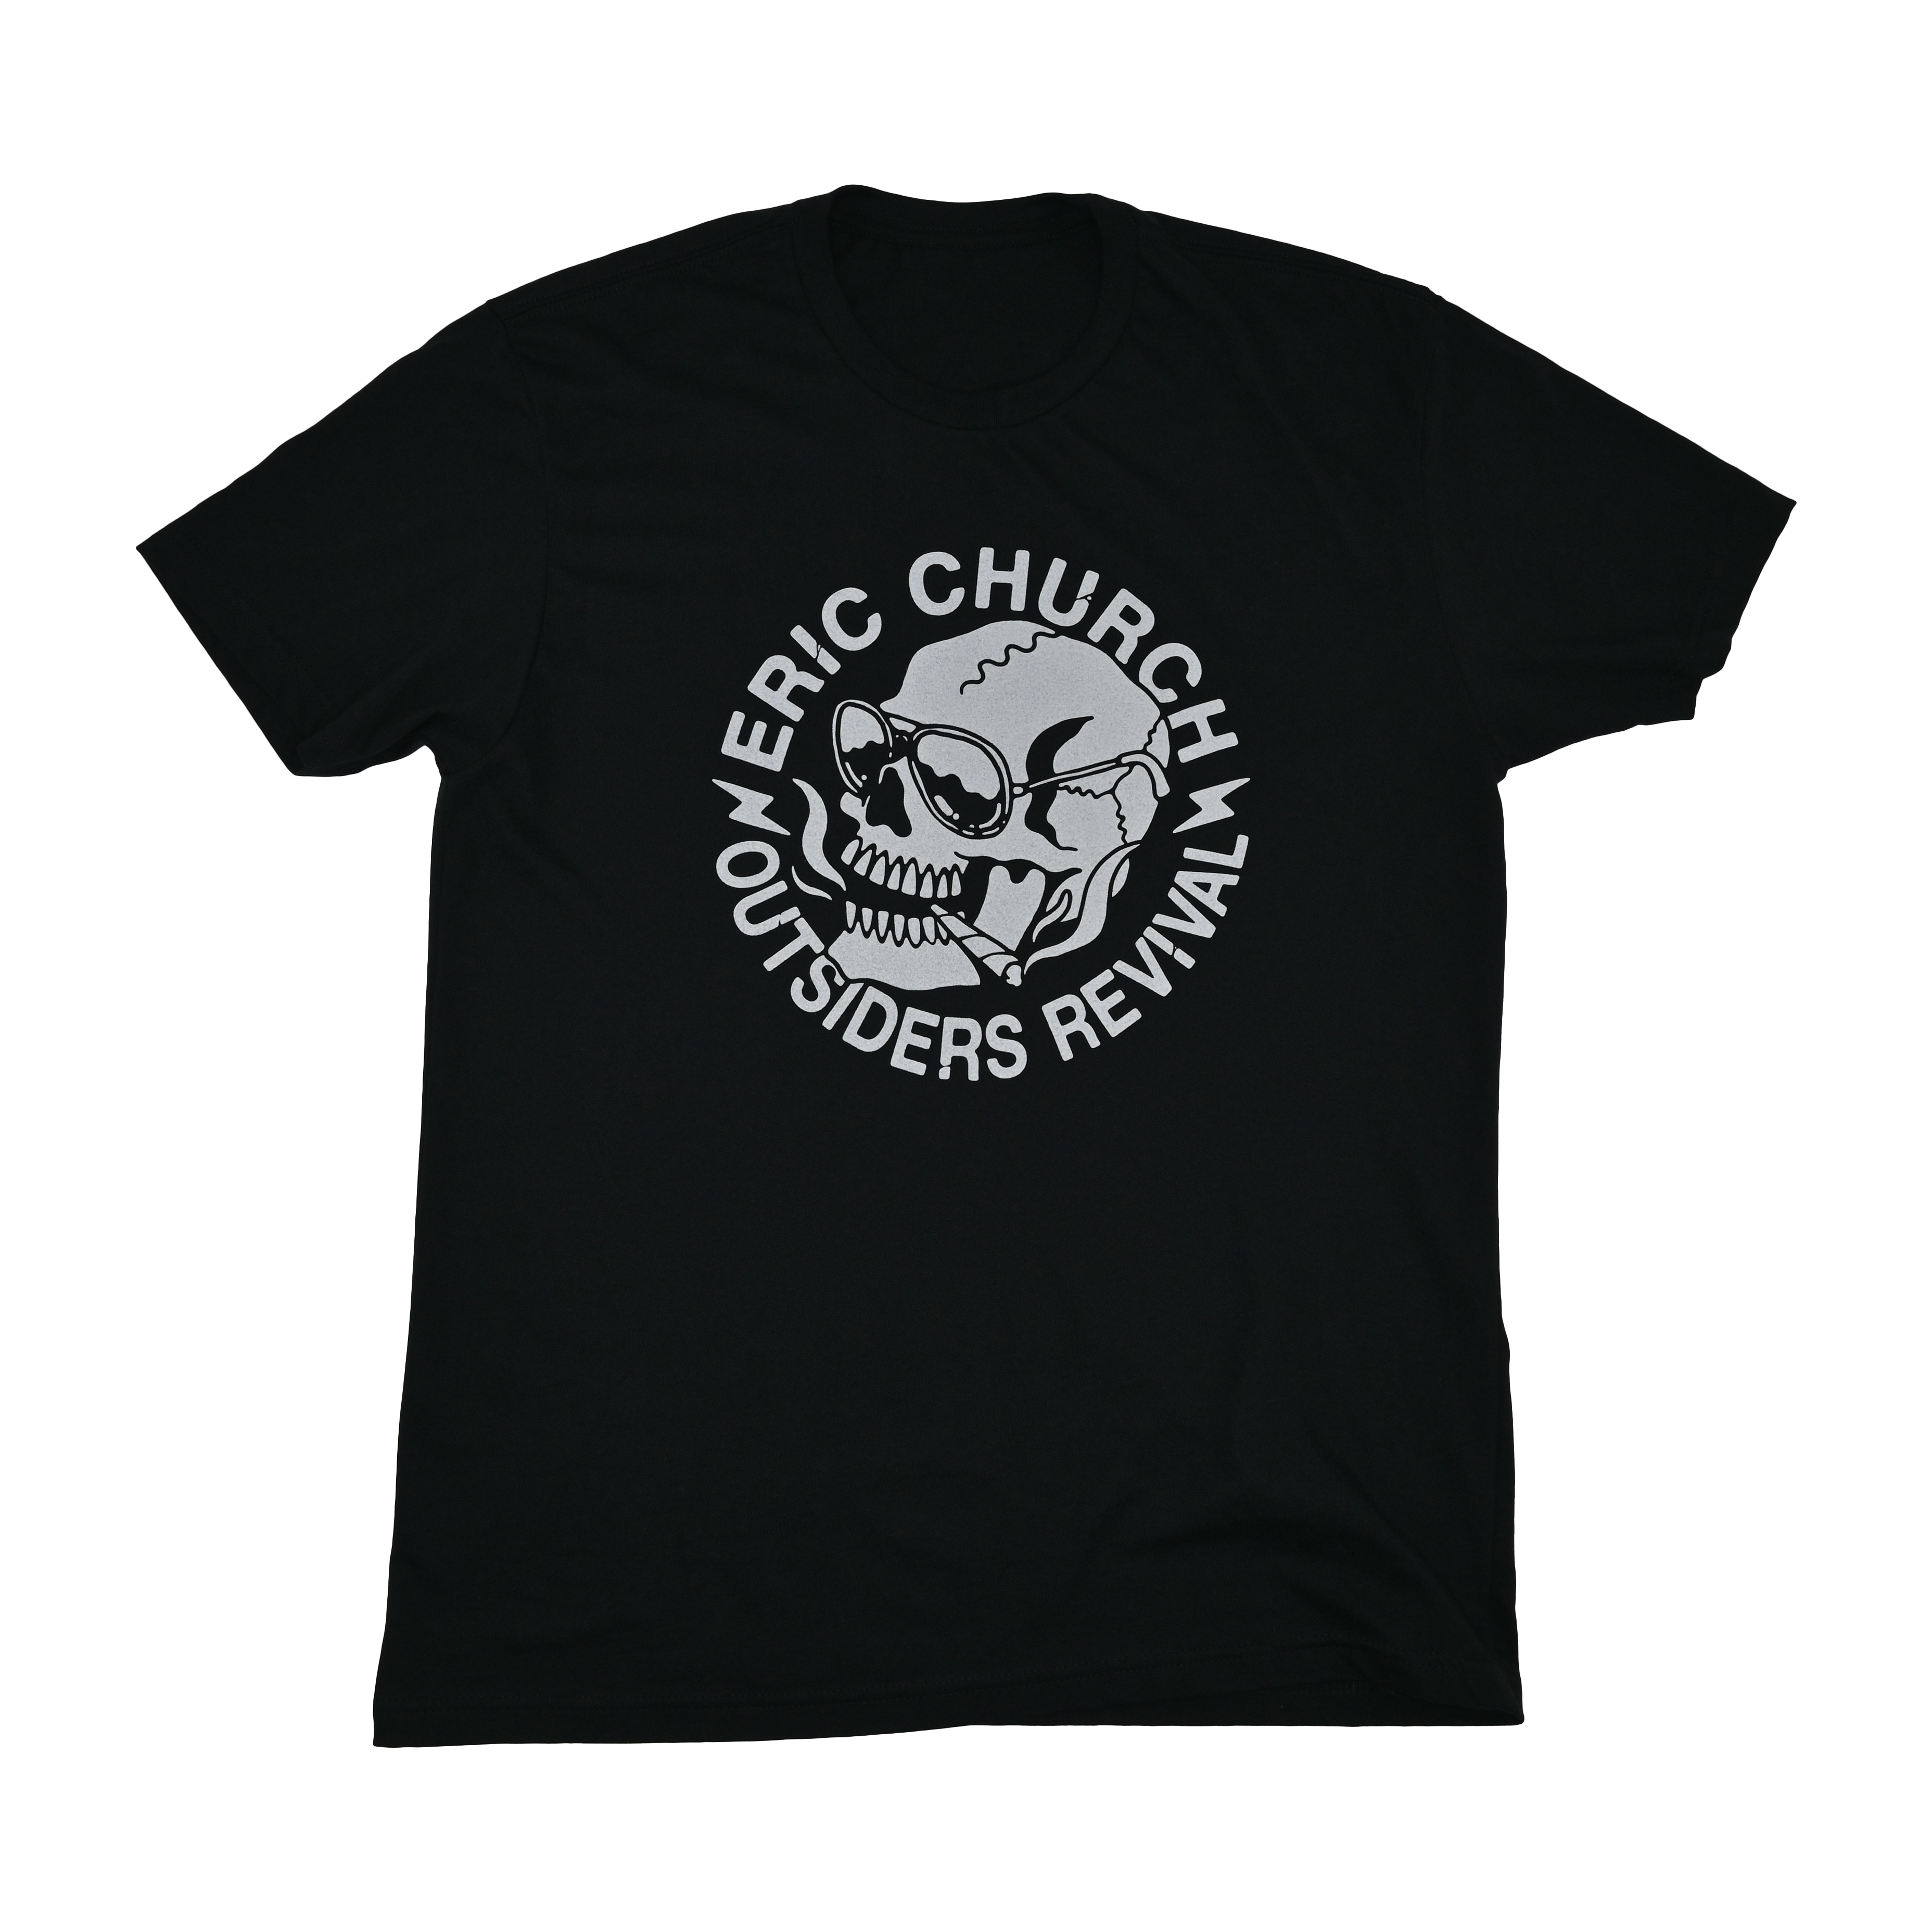 The Outsiders Revival Tour - Smoking Skull T-Shirt